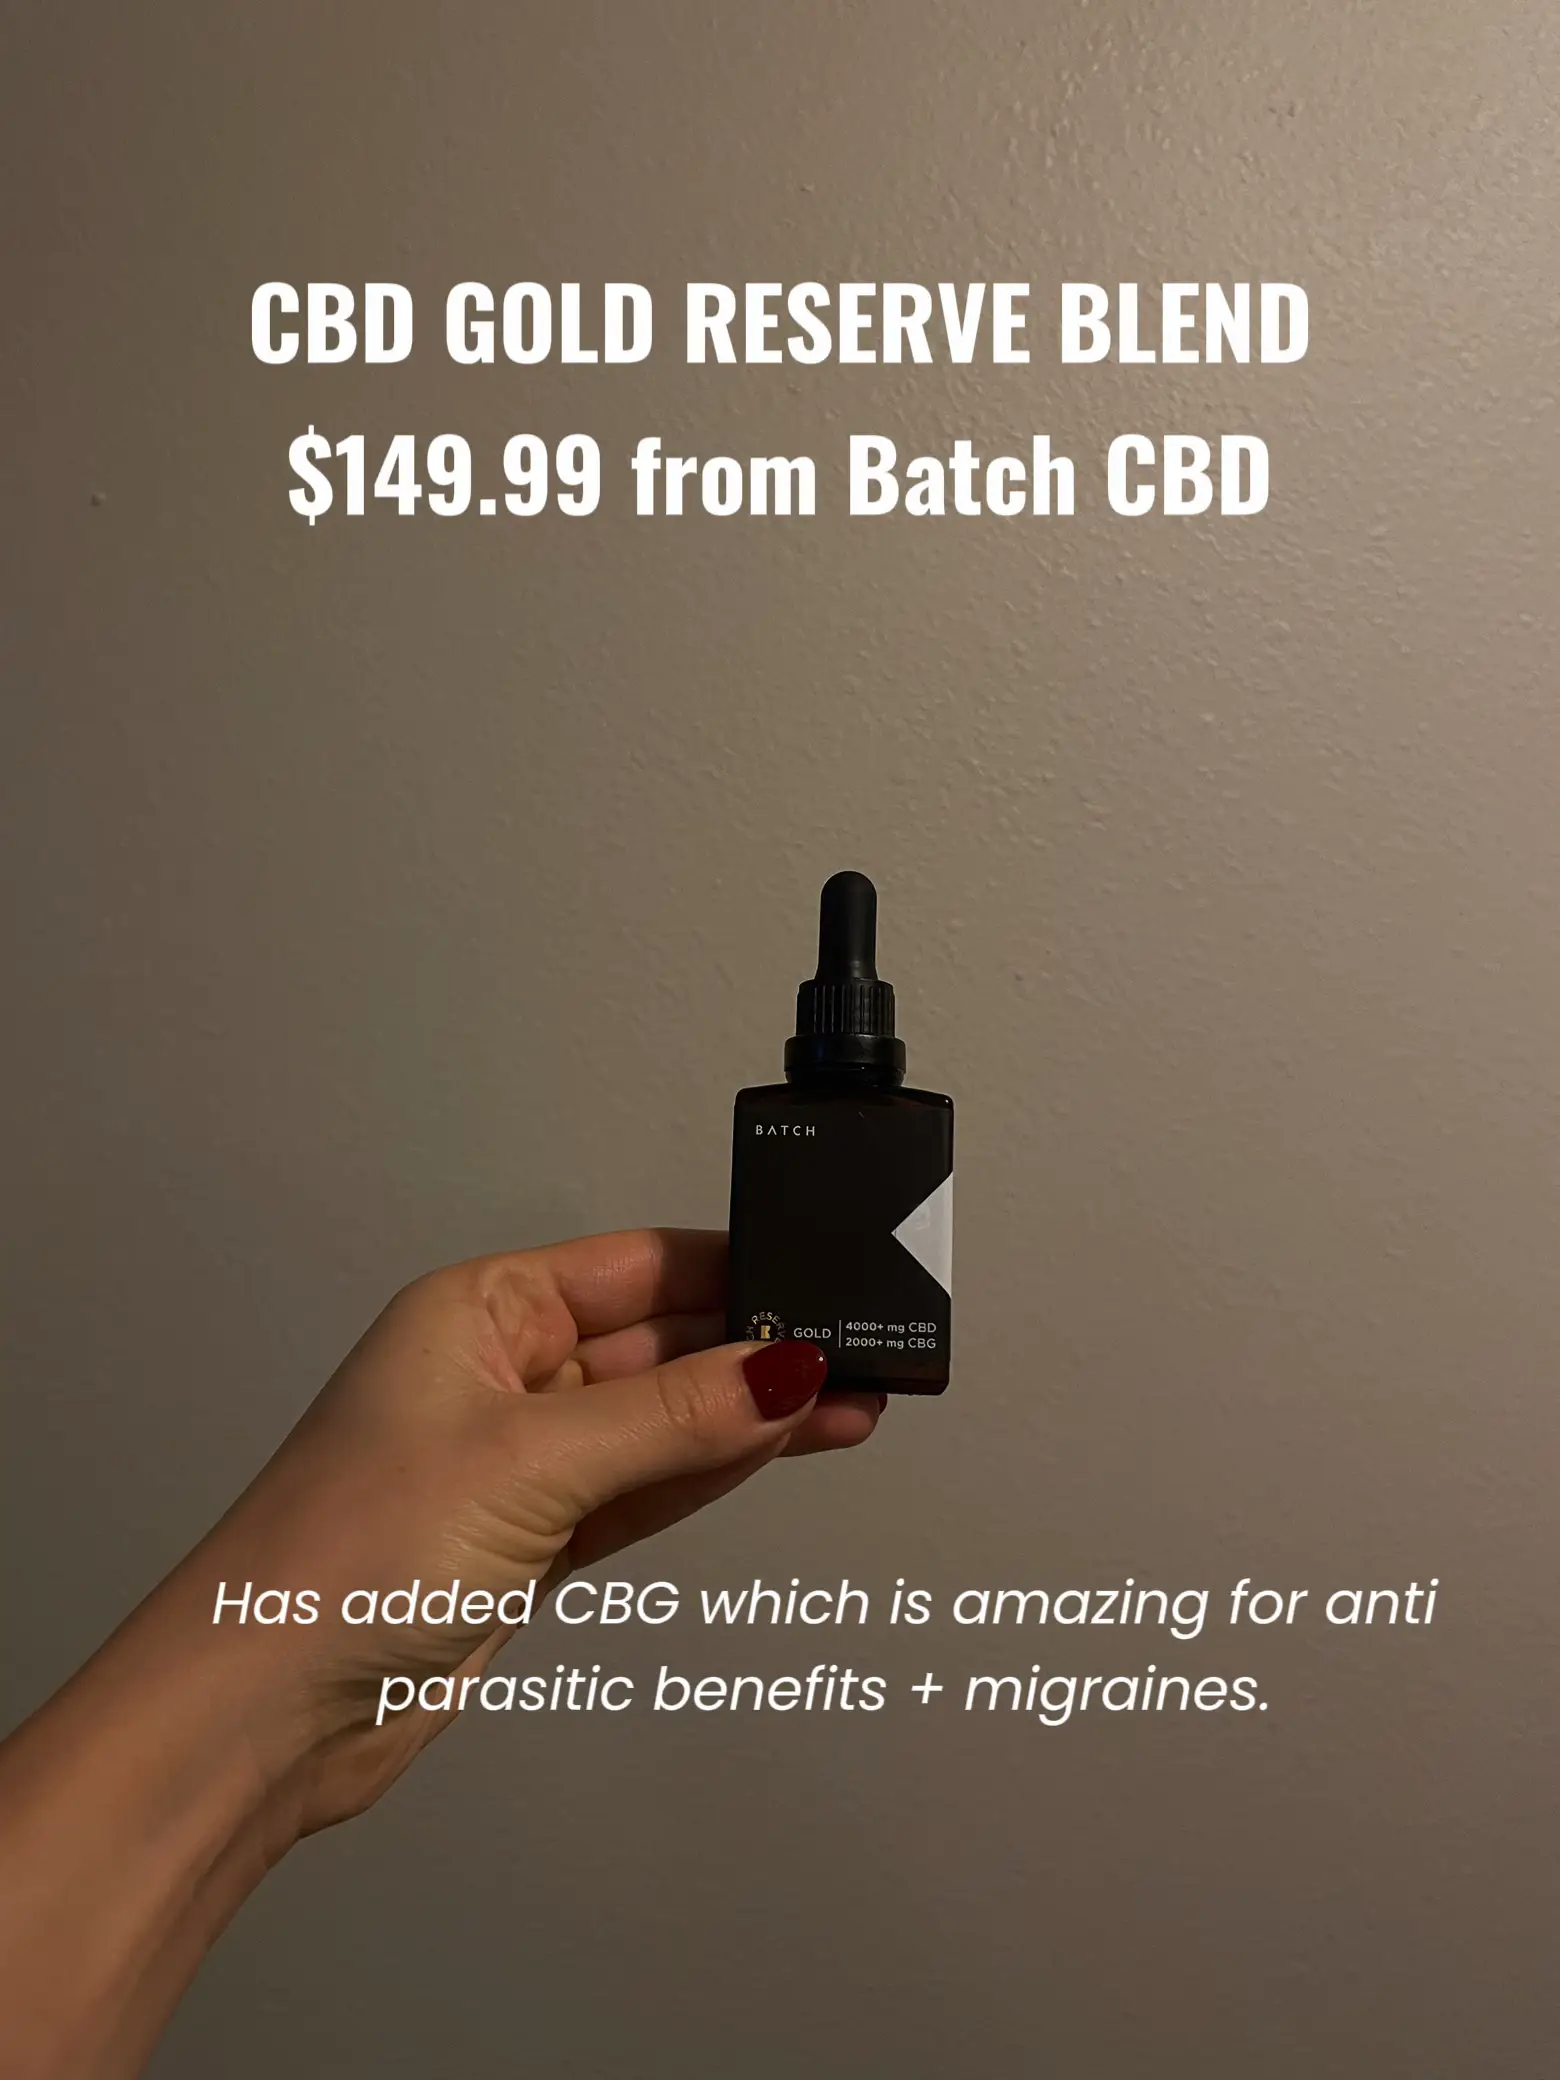  A bottle of CBD gold reserve blend